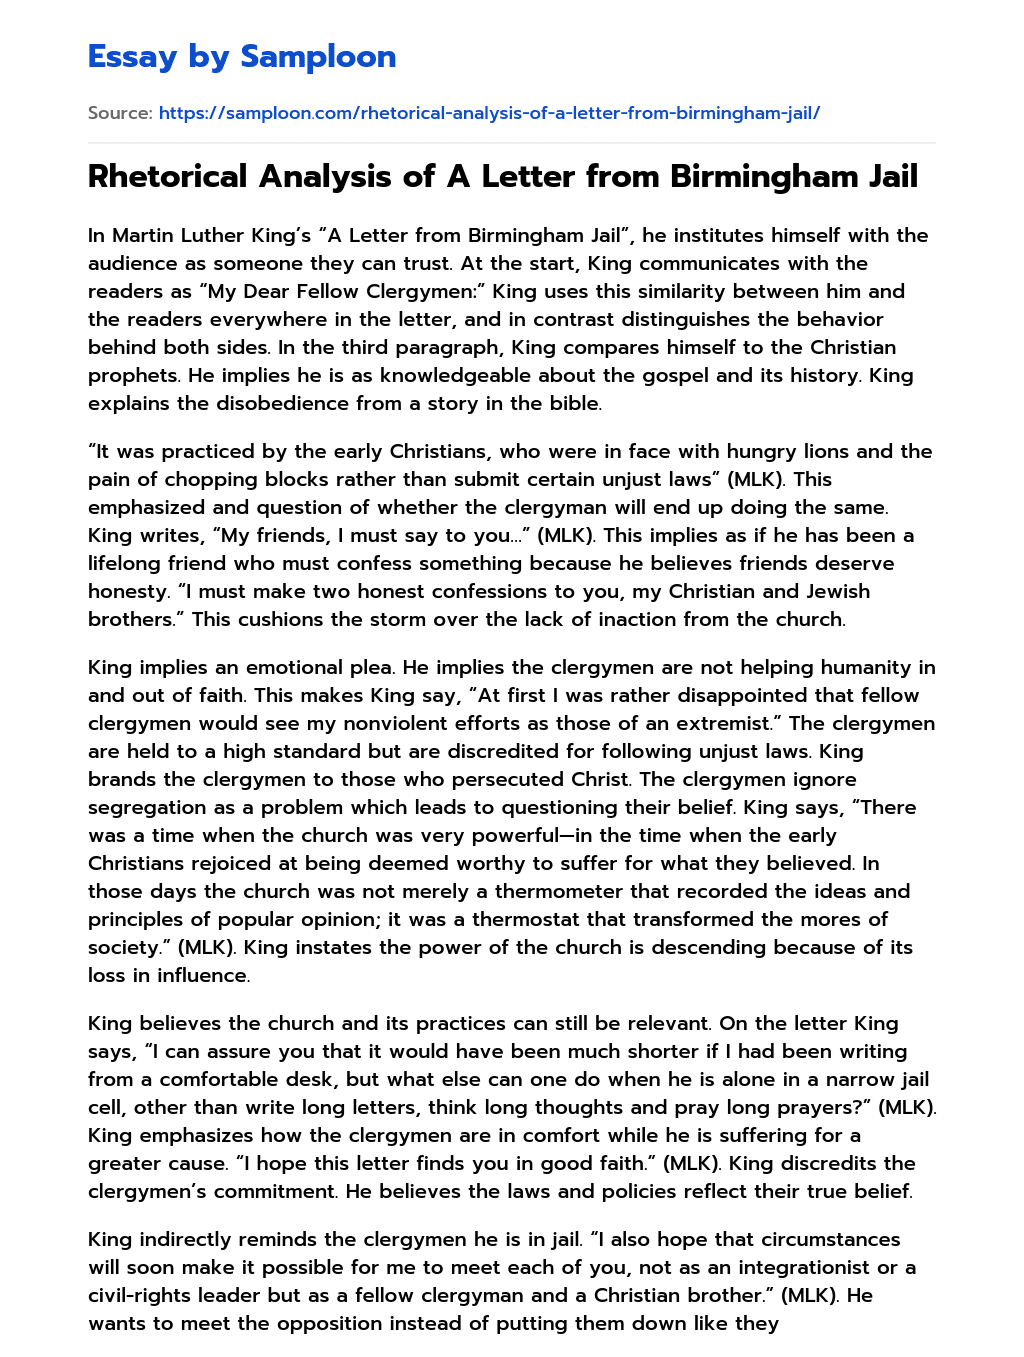 rhetorical-analysis-of-a-letter-from-birmingham-jail-free-essay